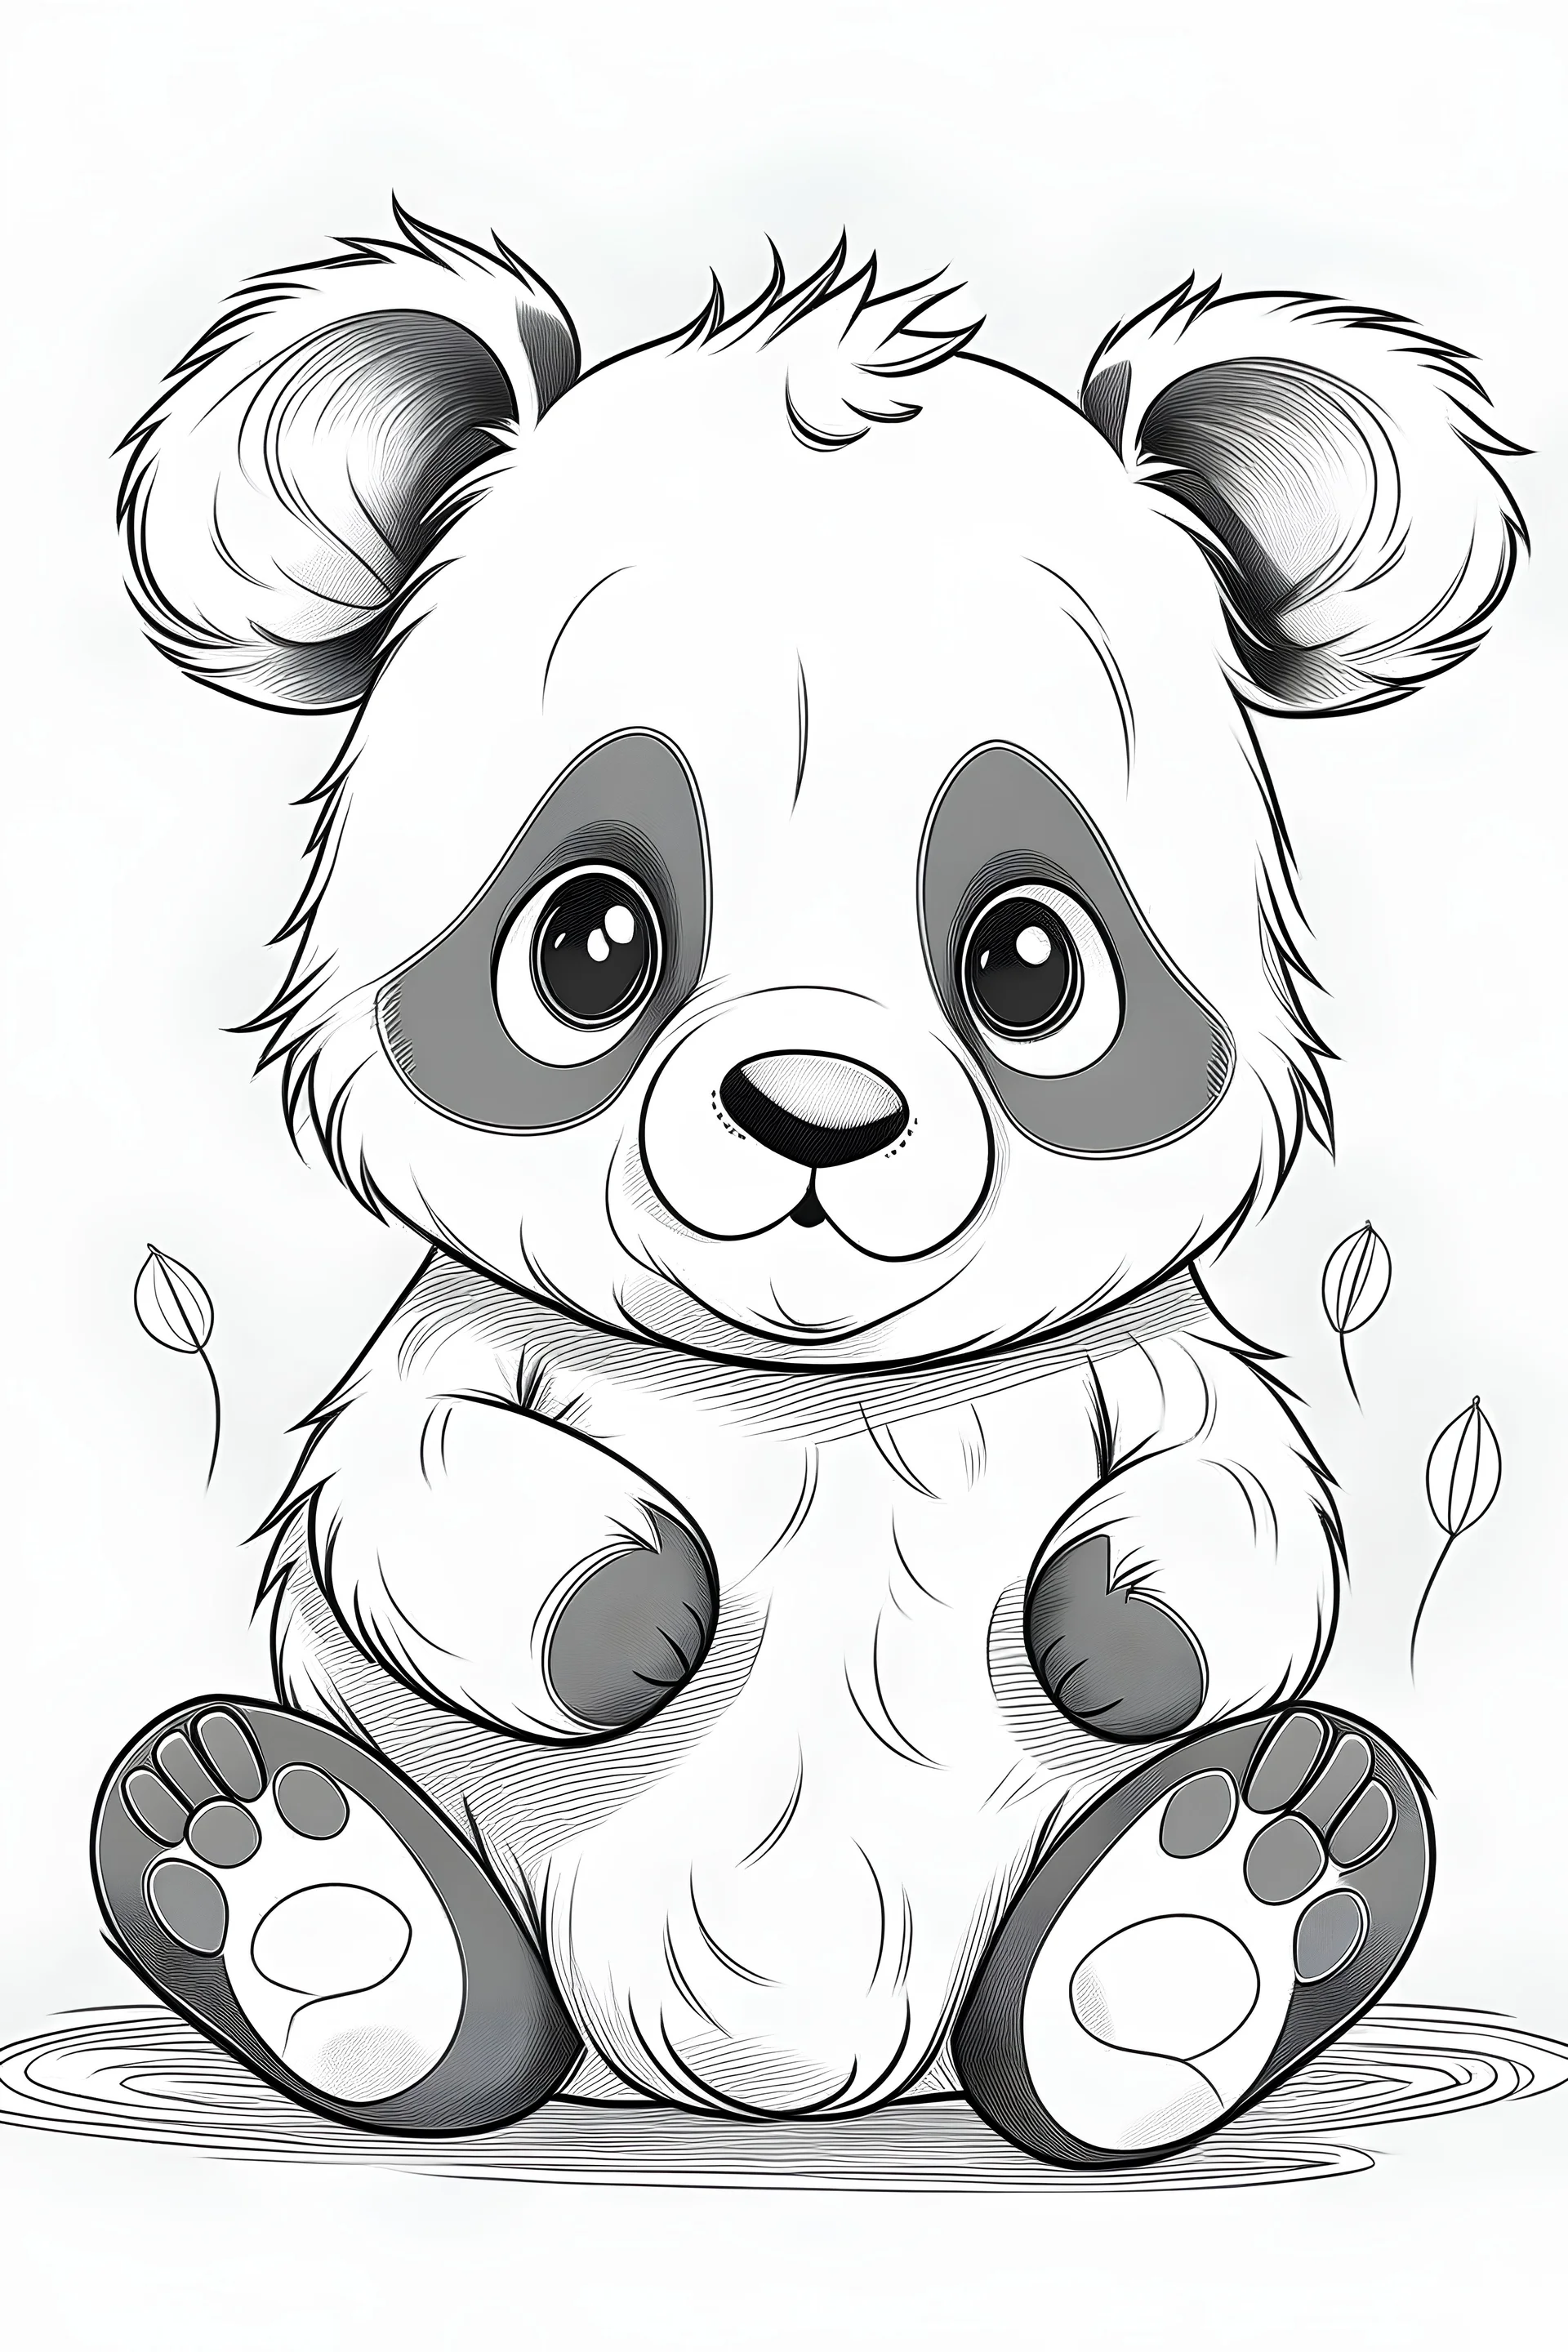 How to Draw A Panda Easy Tutorial | TikTok